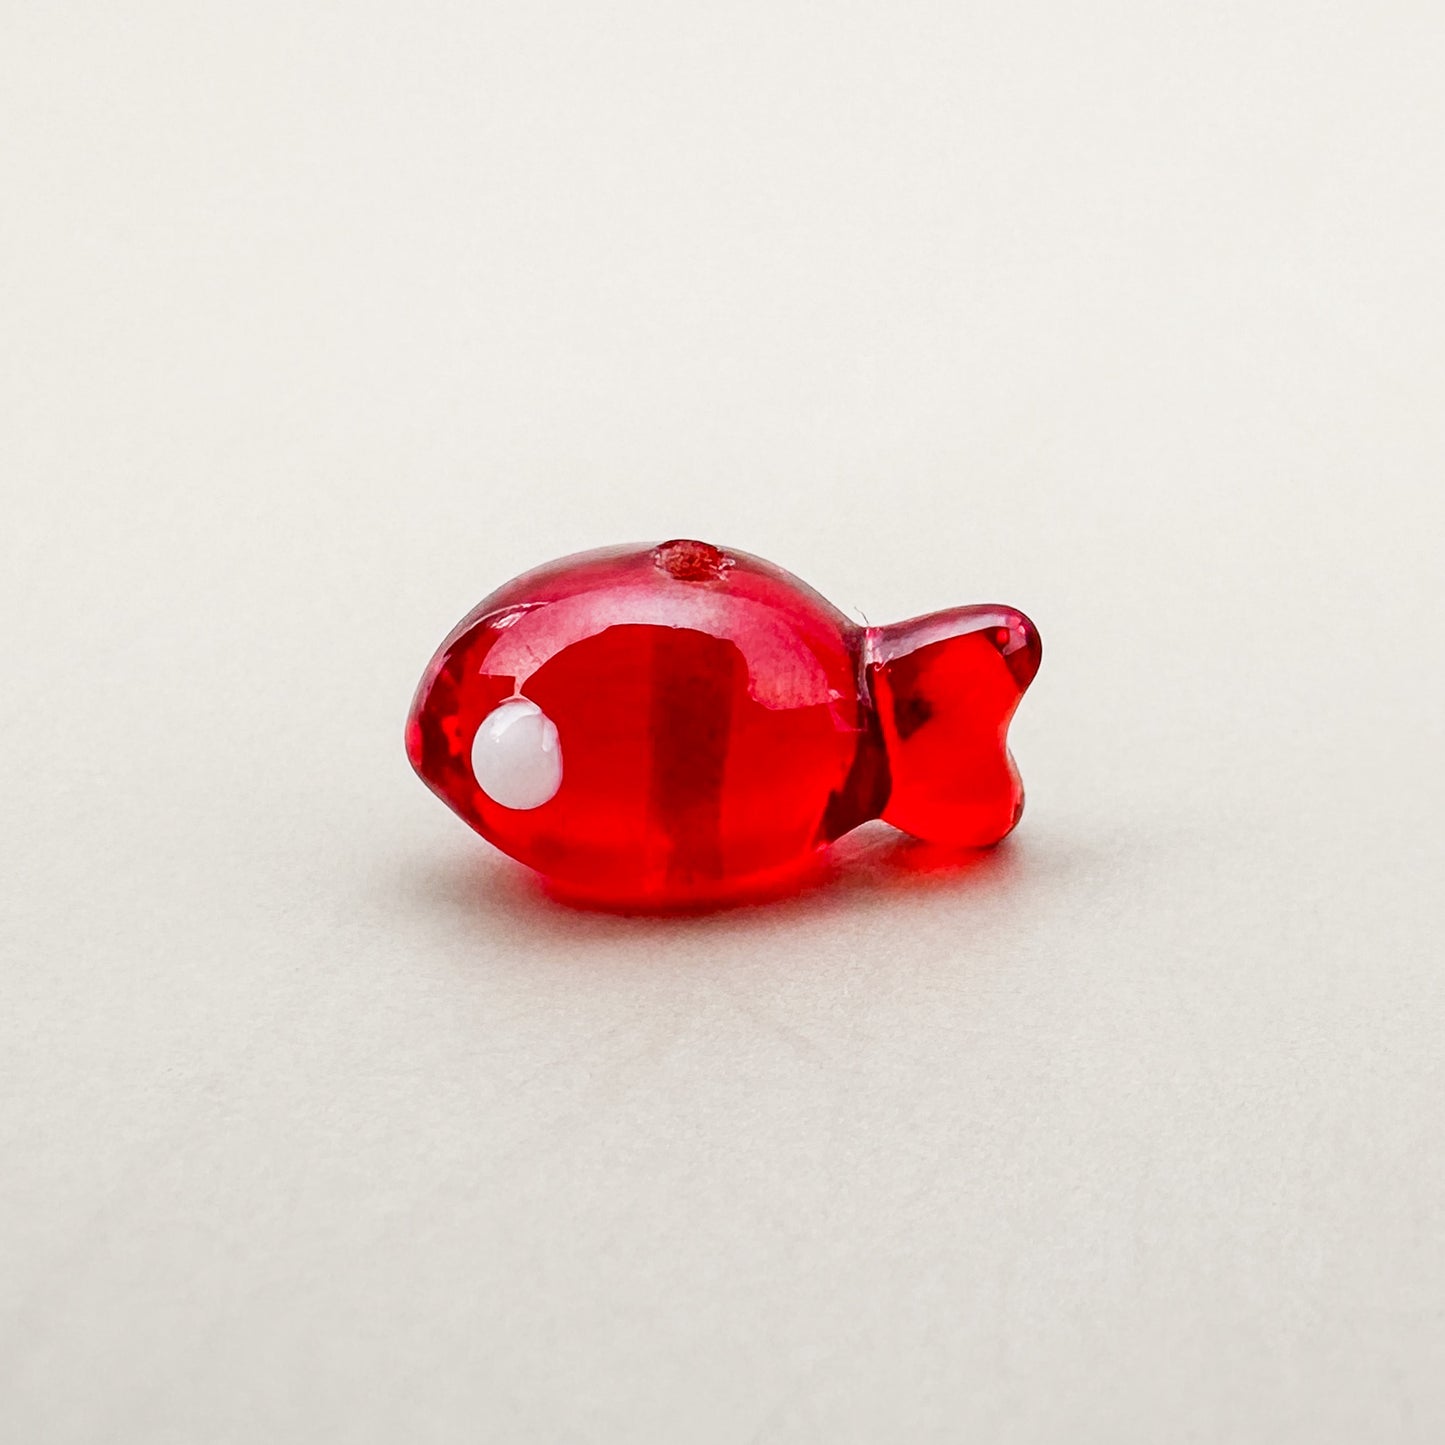 Chibi Handmade Glass Beads Fish (2 Color Options) - 1 pc. (LB178)